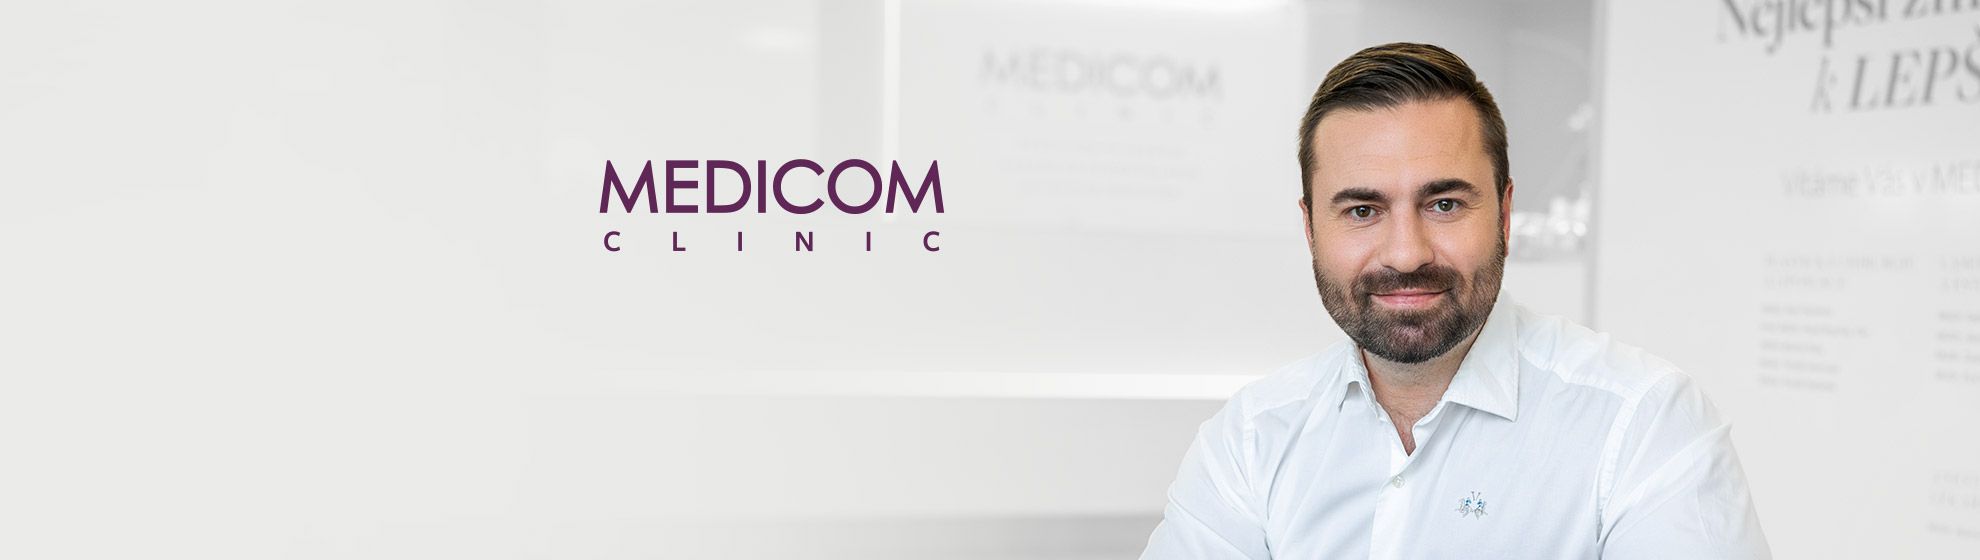 MUDr. Pavel Kobzík - MEDICOM Clinic